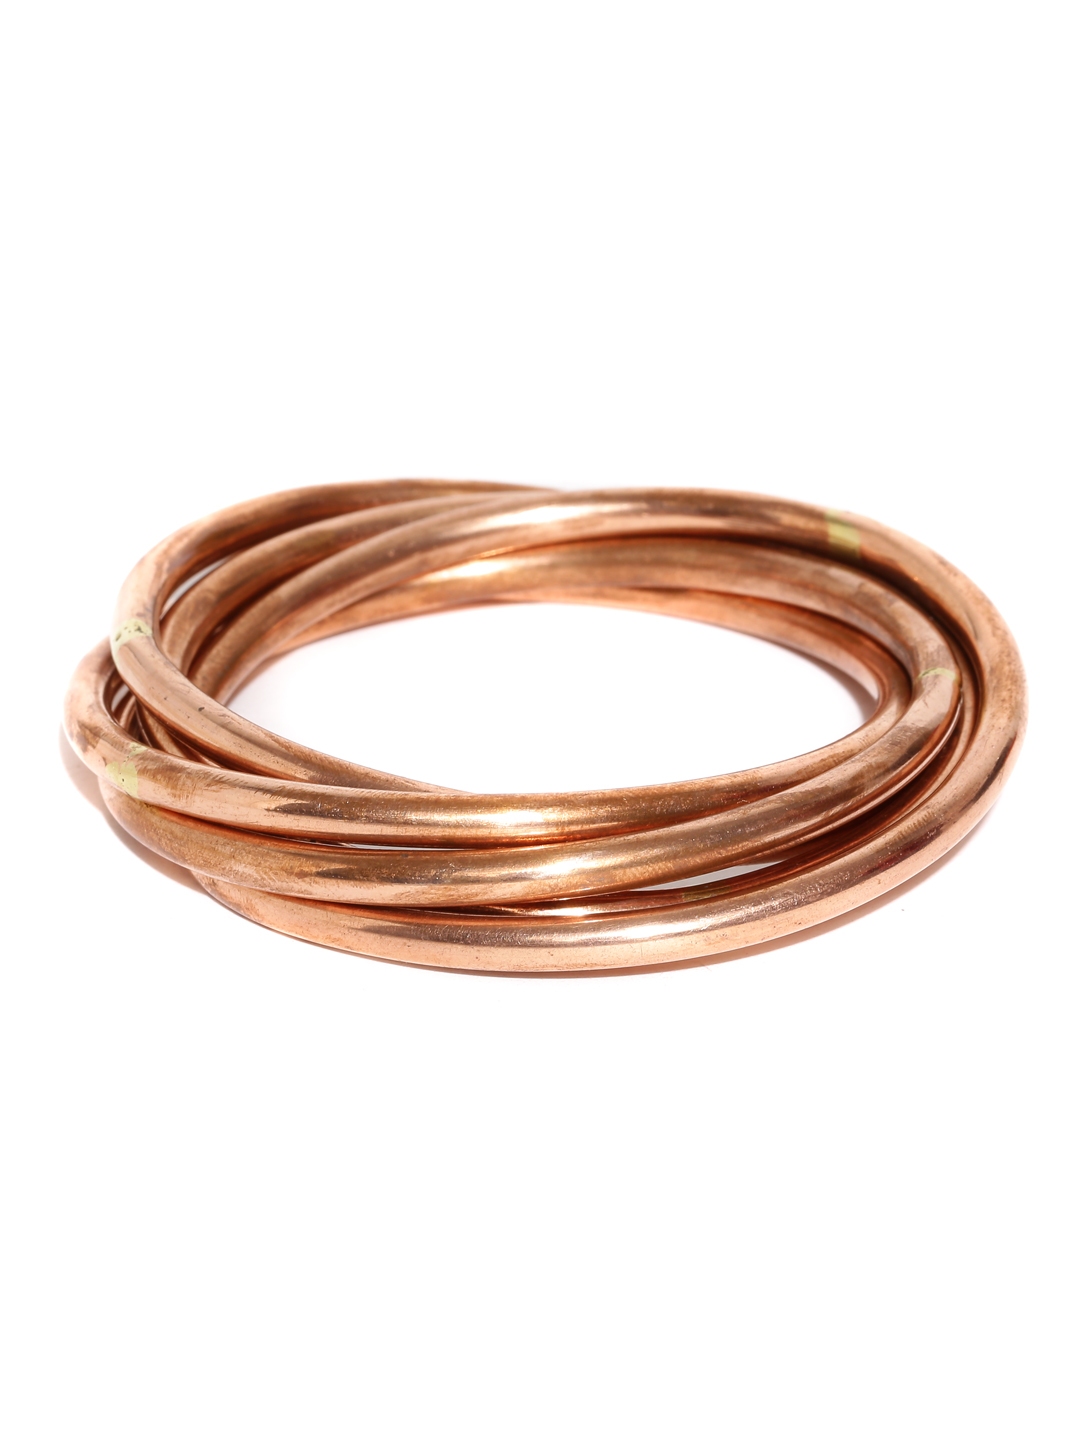 Buy Reaowazo Copper Bracelets For Women Copper Magnetic Bracelet For Women  Magnetic Copper Bracelet With 3 More Smarter Clasps Love Heart Jewelry Gift  for Women Girls Copper magnetic at Amazonin